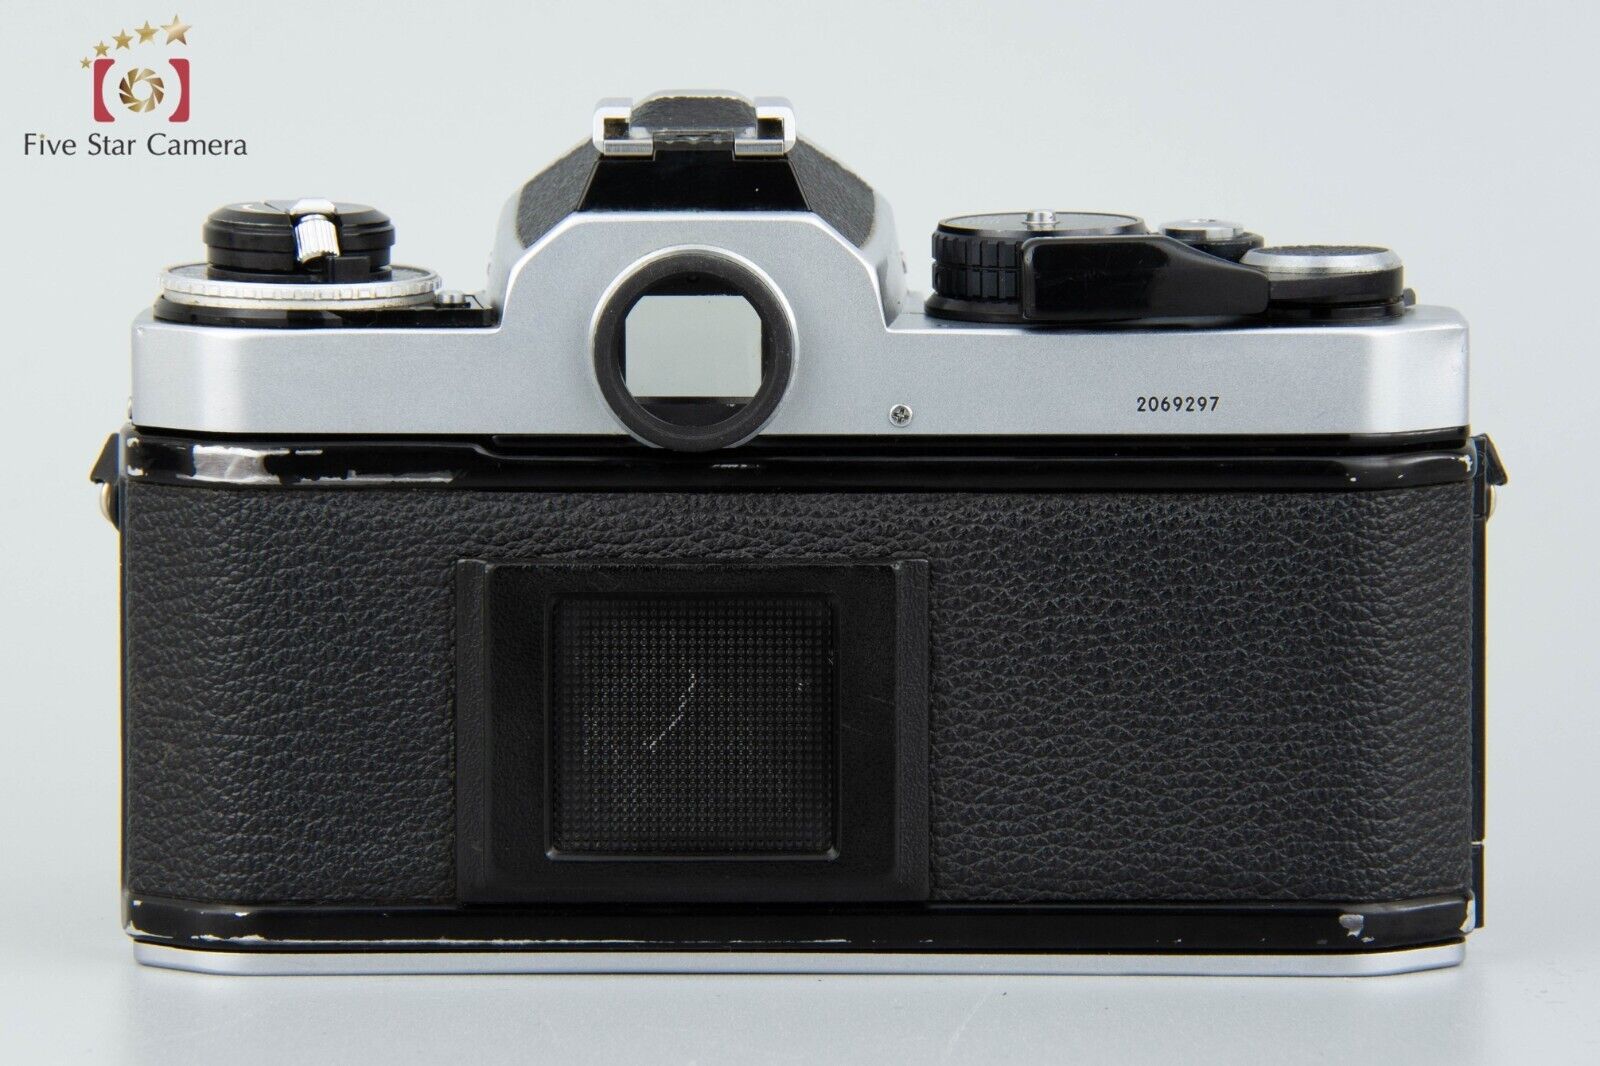 Nikon FE2 Silver 35mm SLR Film Camera Body